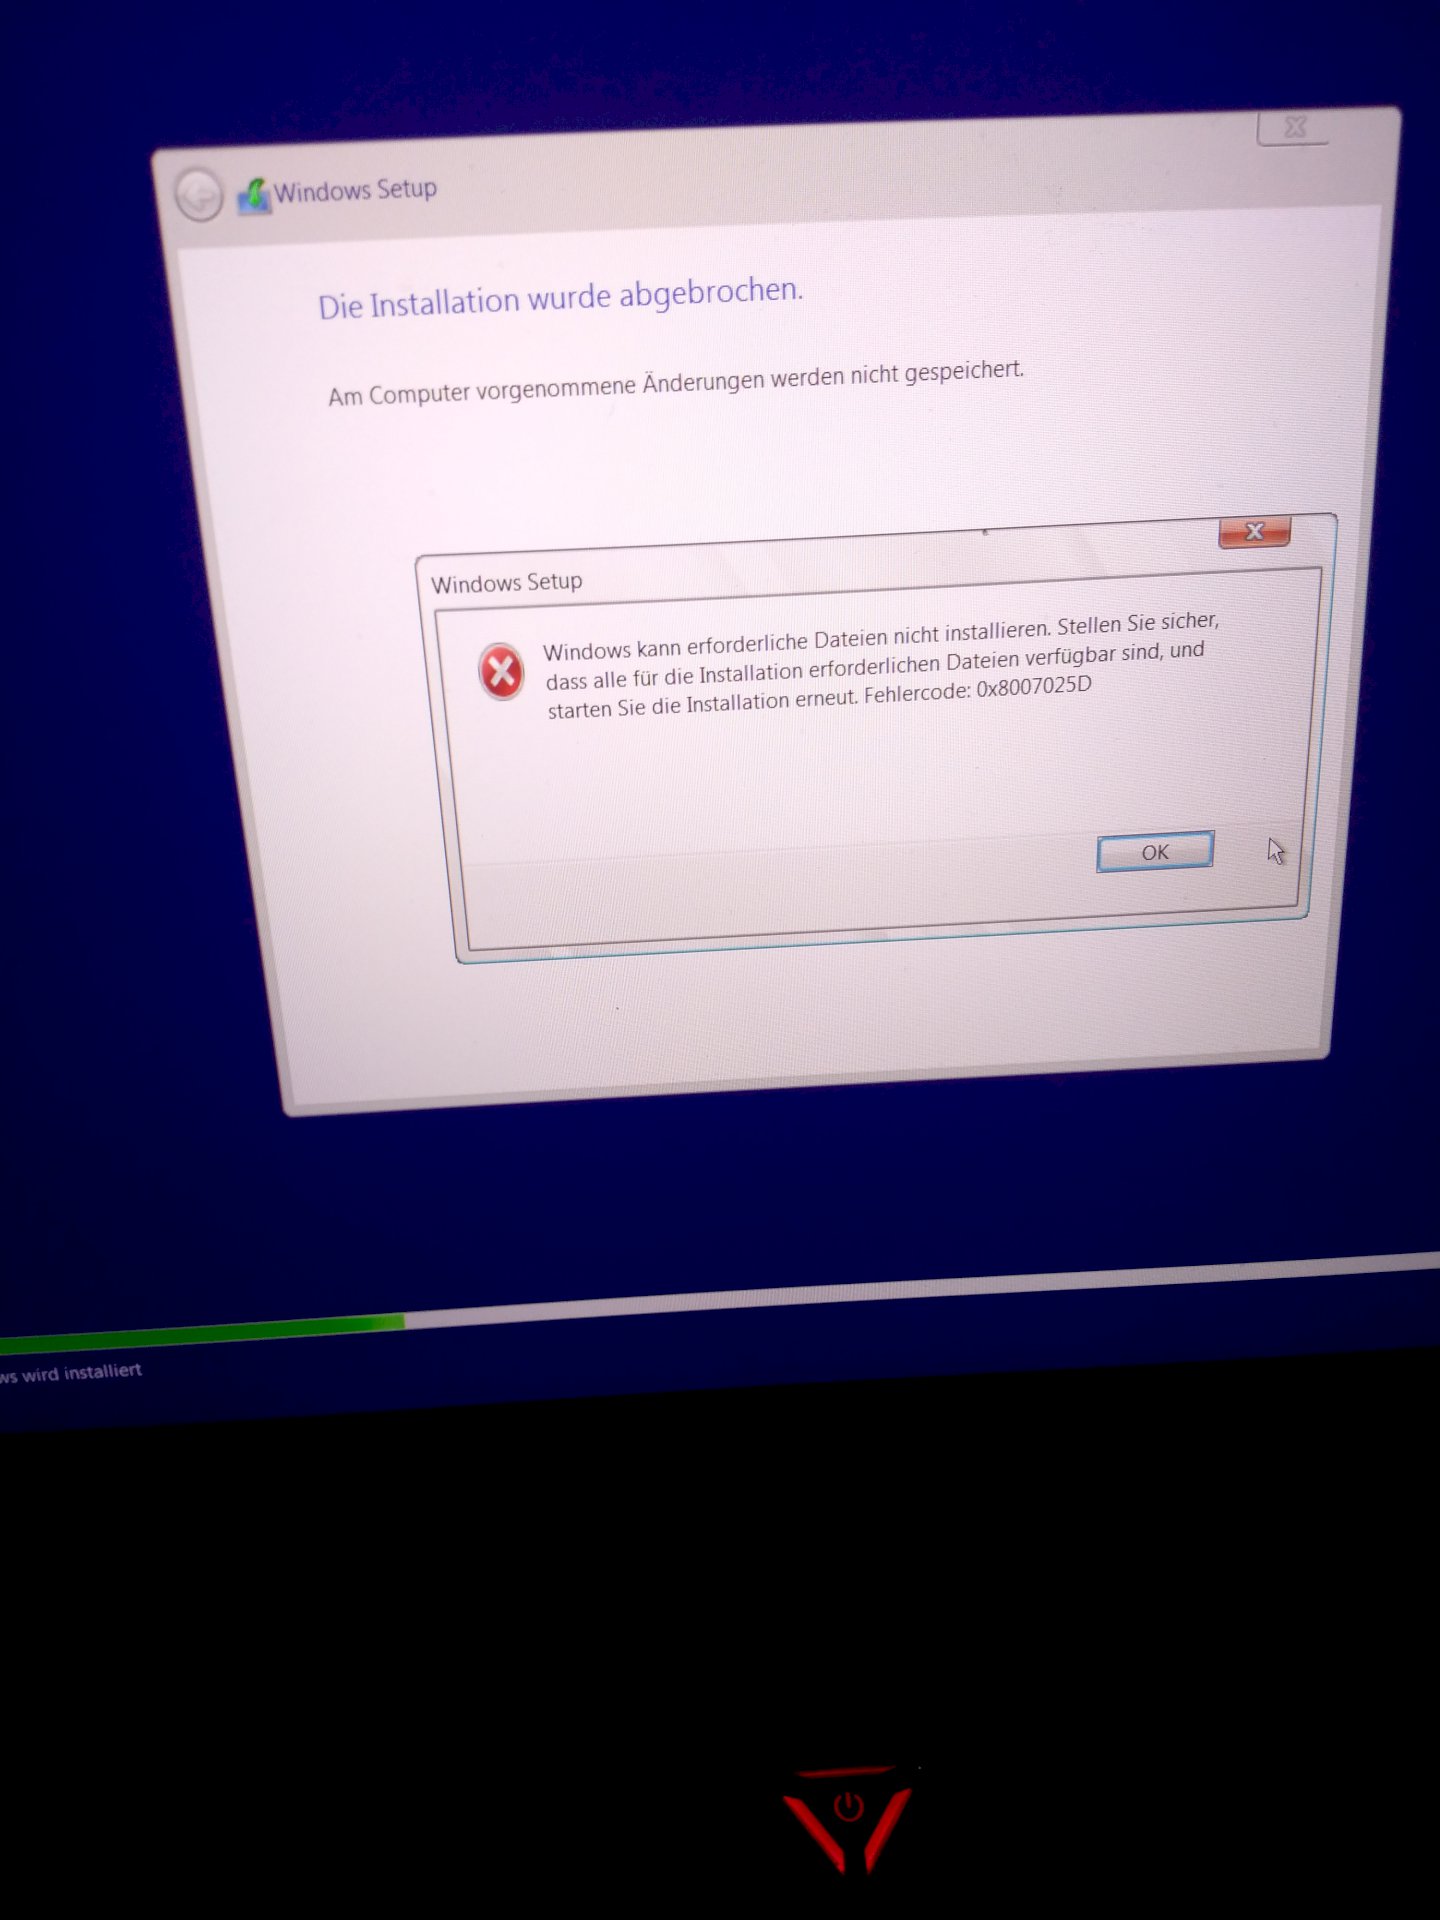 Windows 10 install error message - 1